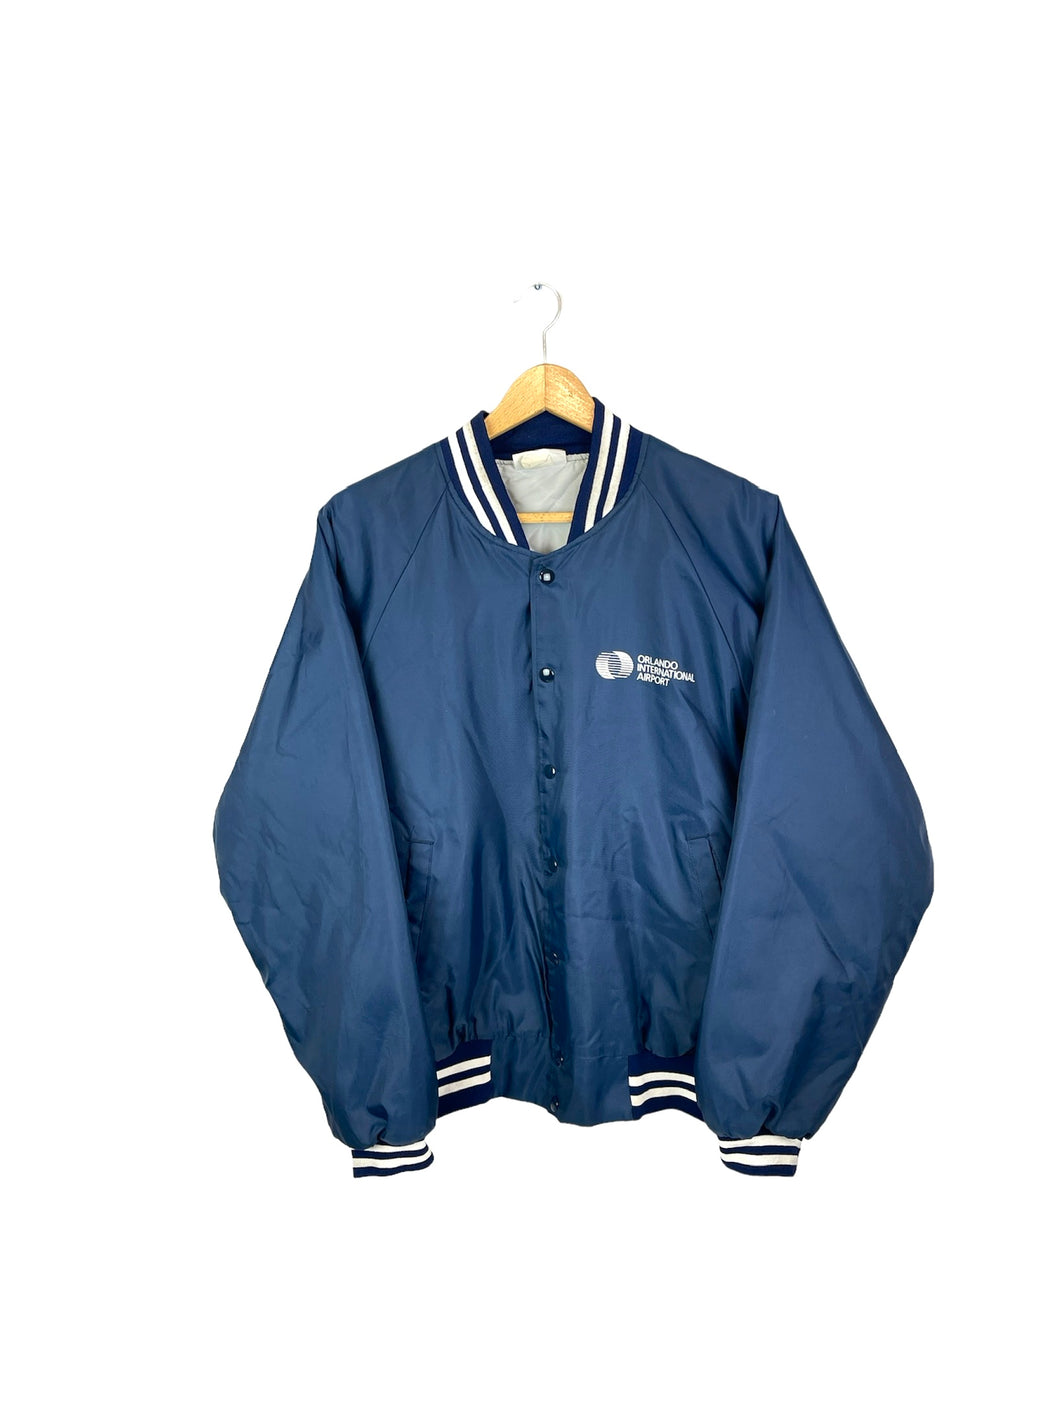 Vintage Varsity Jacket - Large